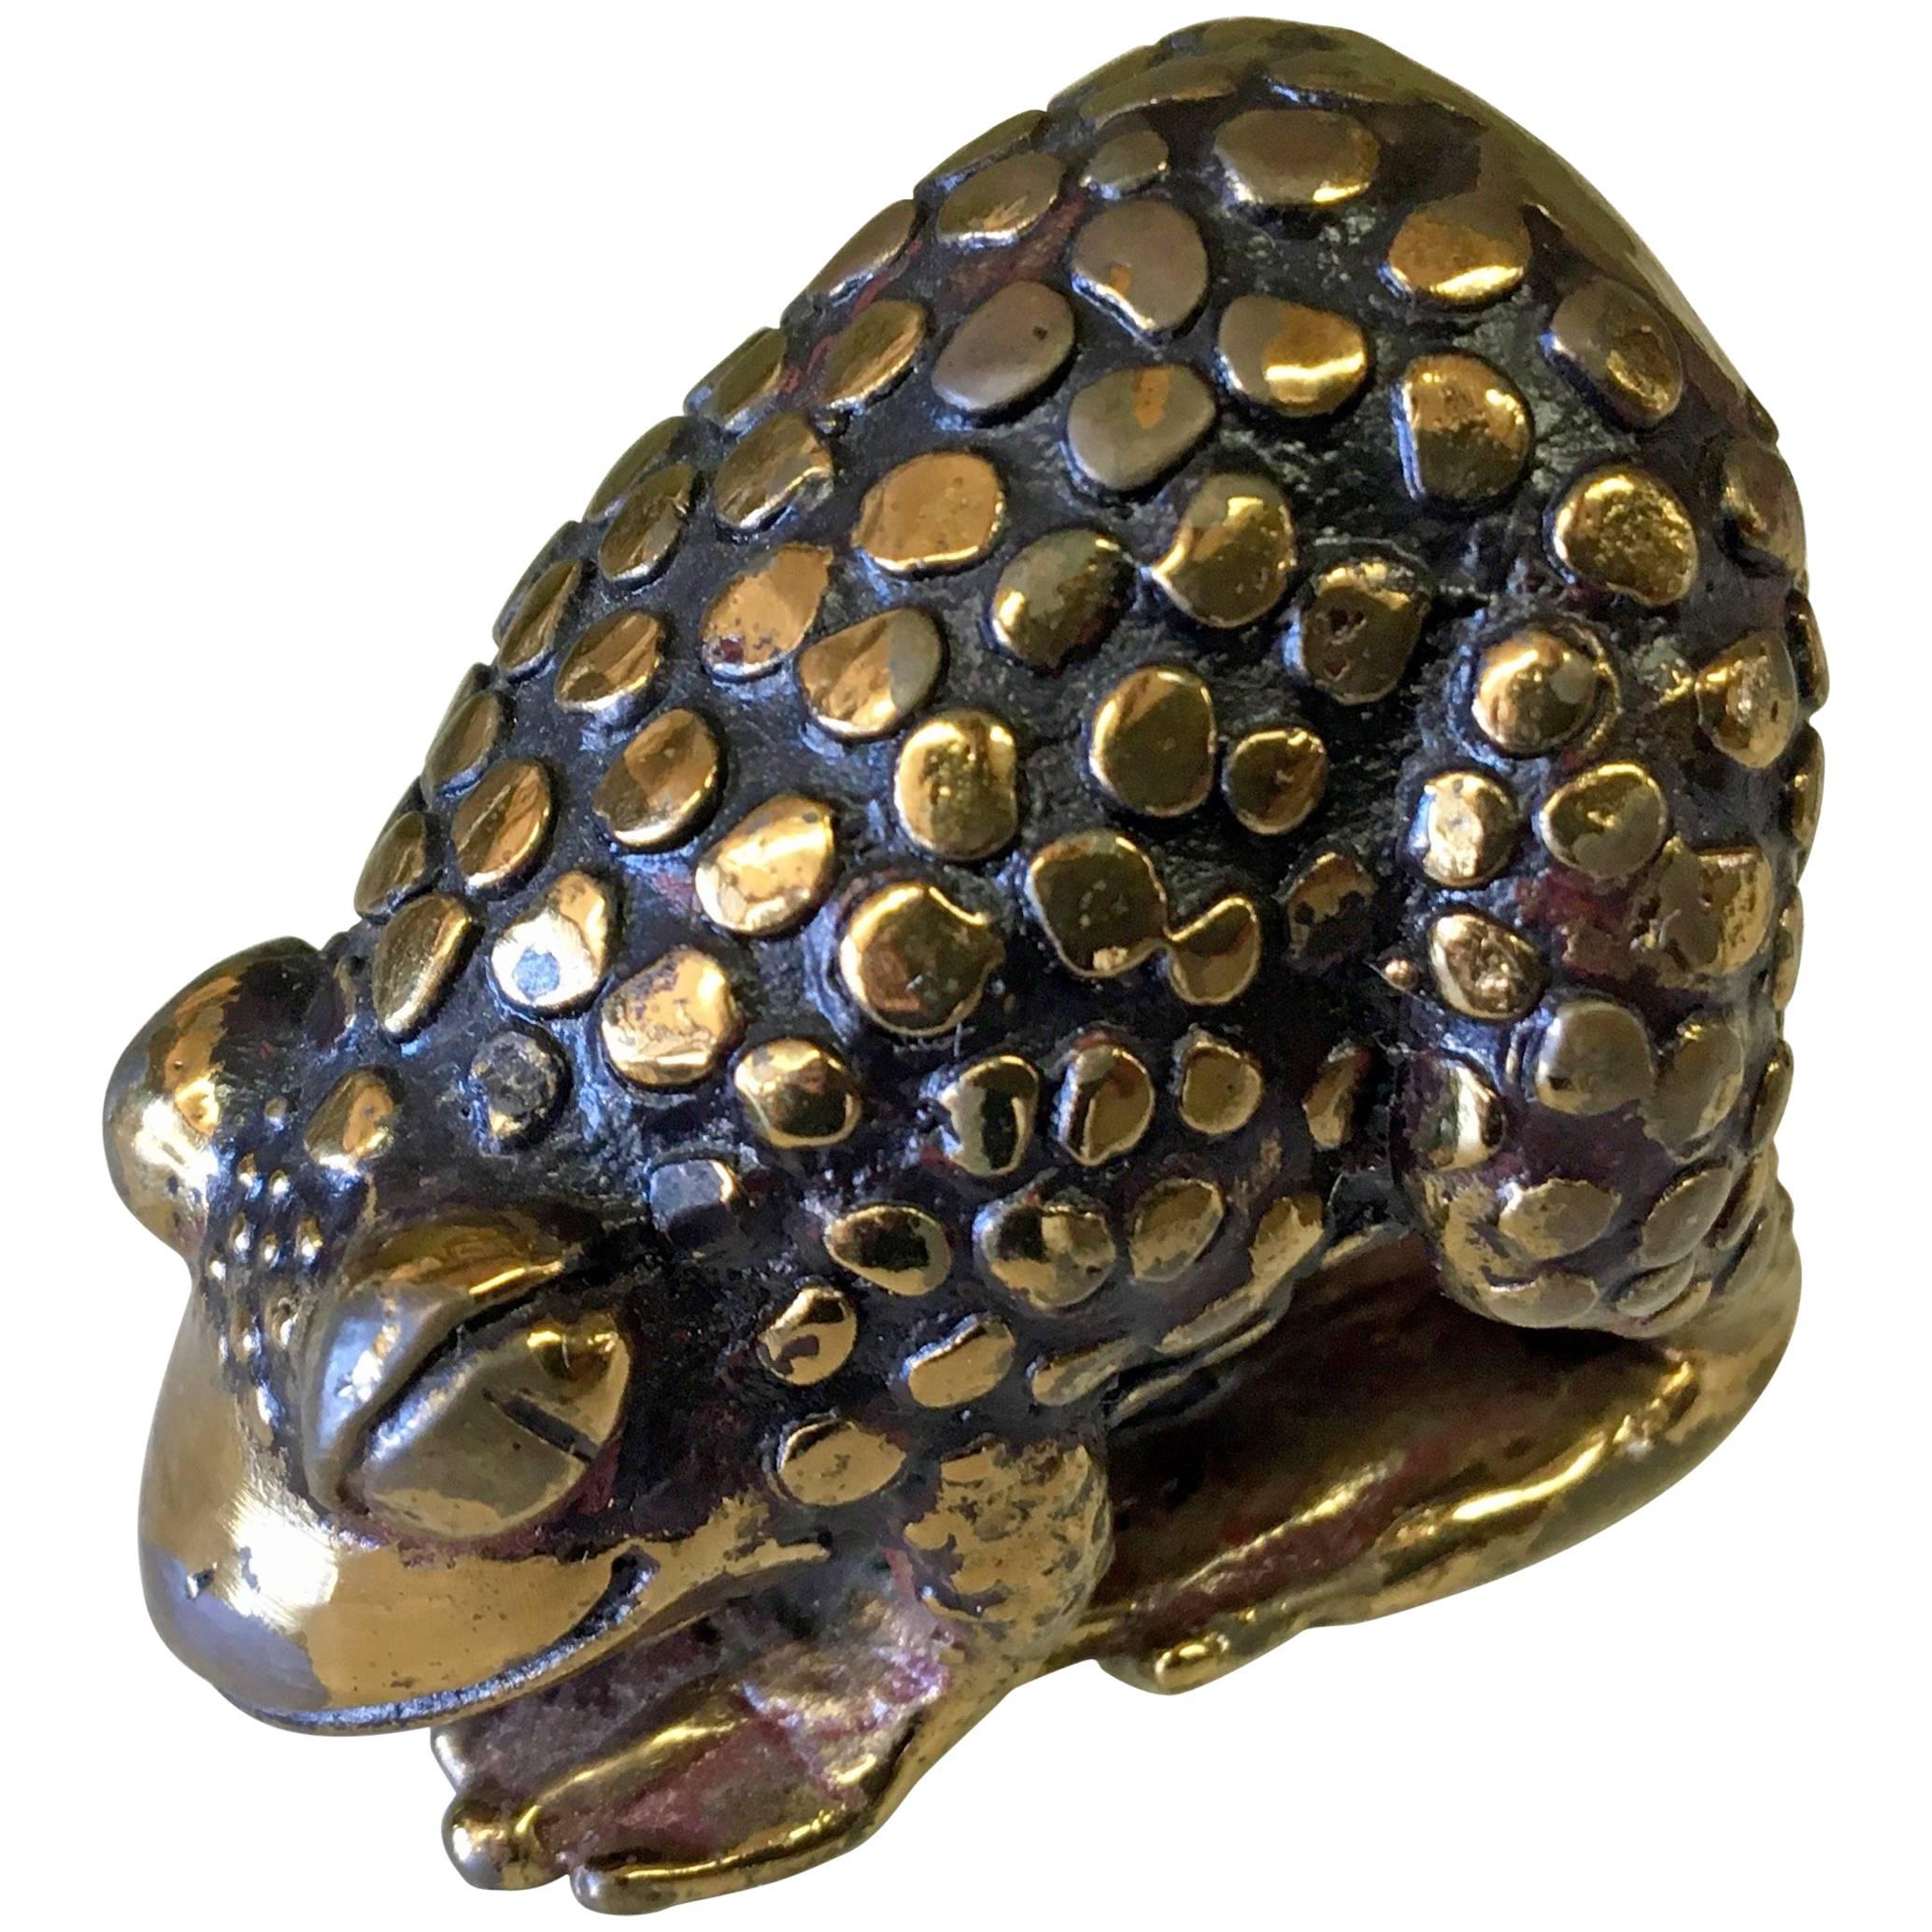 Rare Miniature Sculpture by Joseph Addotta Gold¬-Plated Bronze Frog Signed